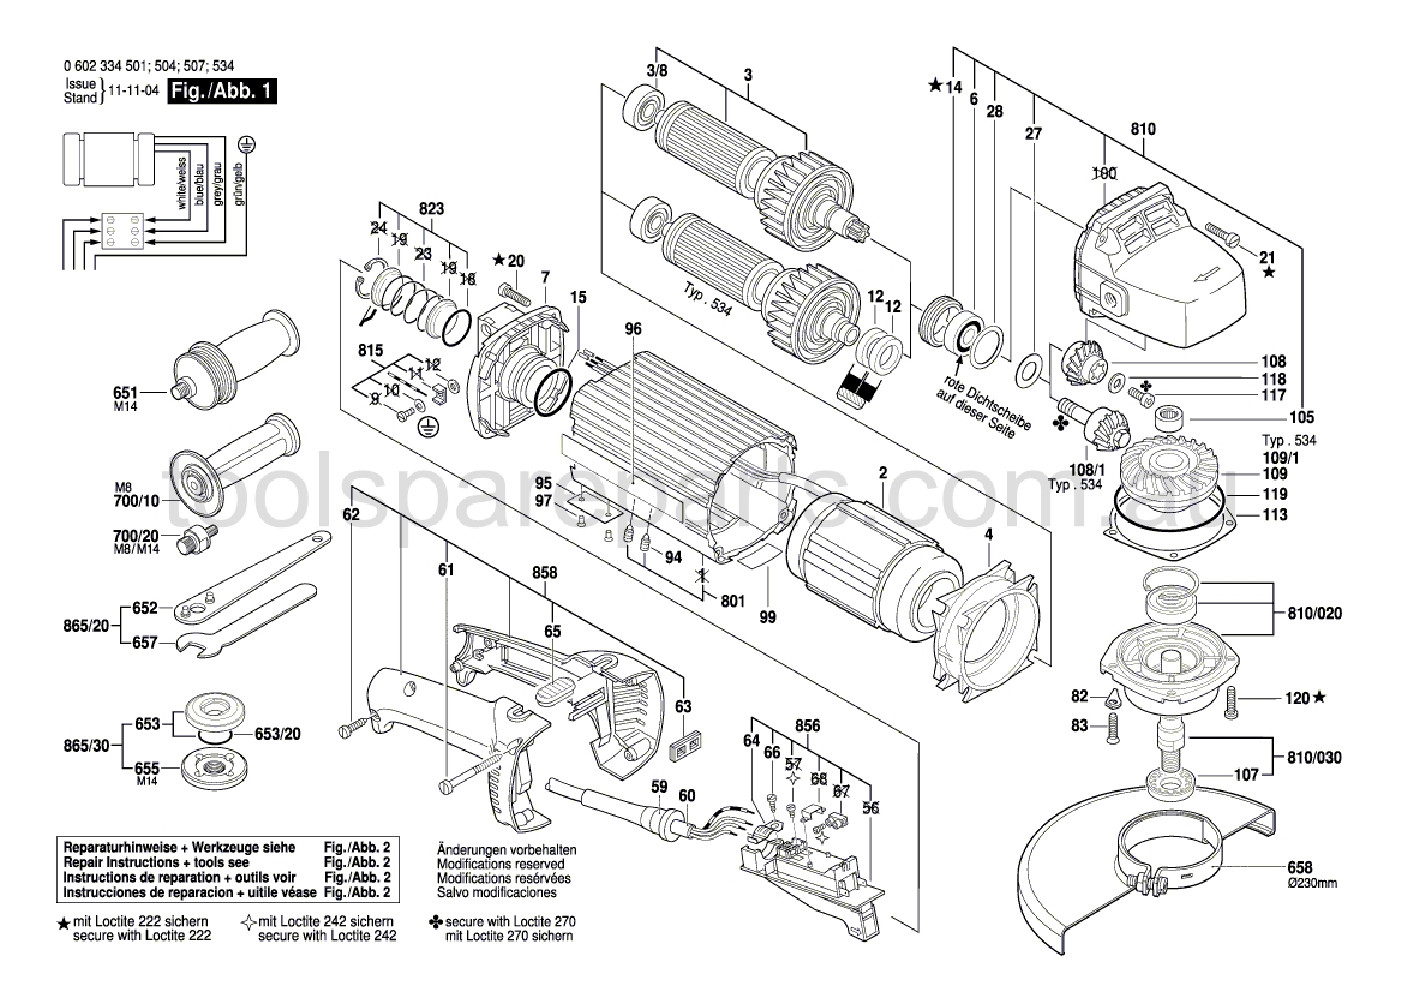 Bosch HWS 810/230 0602334504  Diagram 1